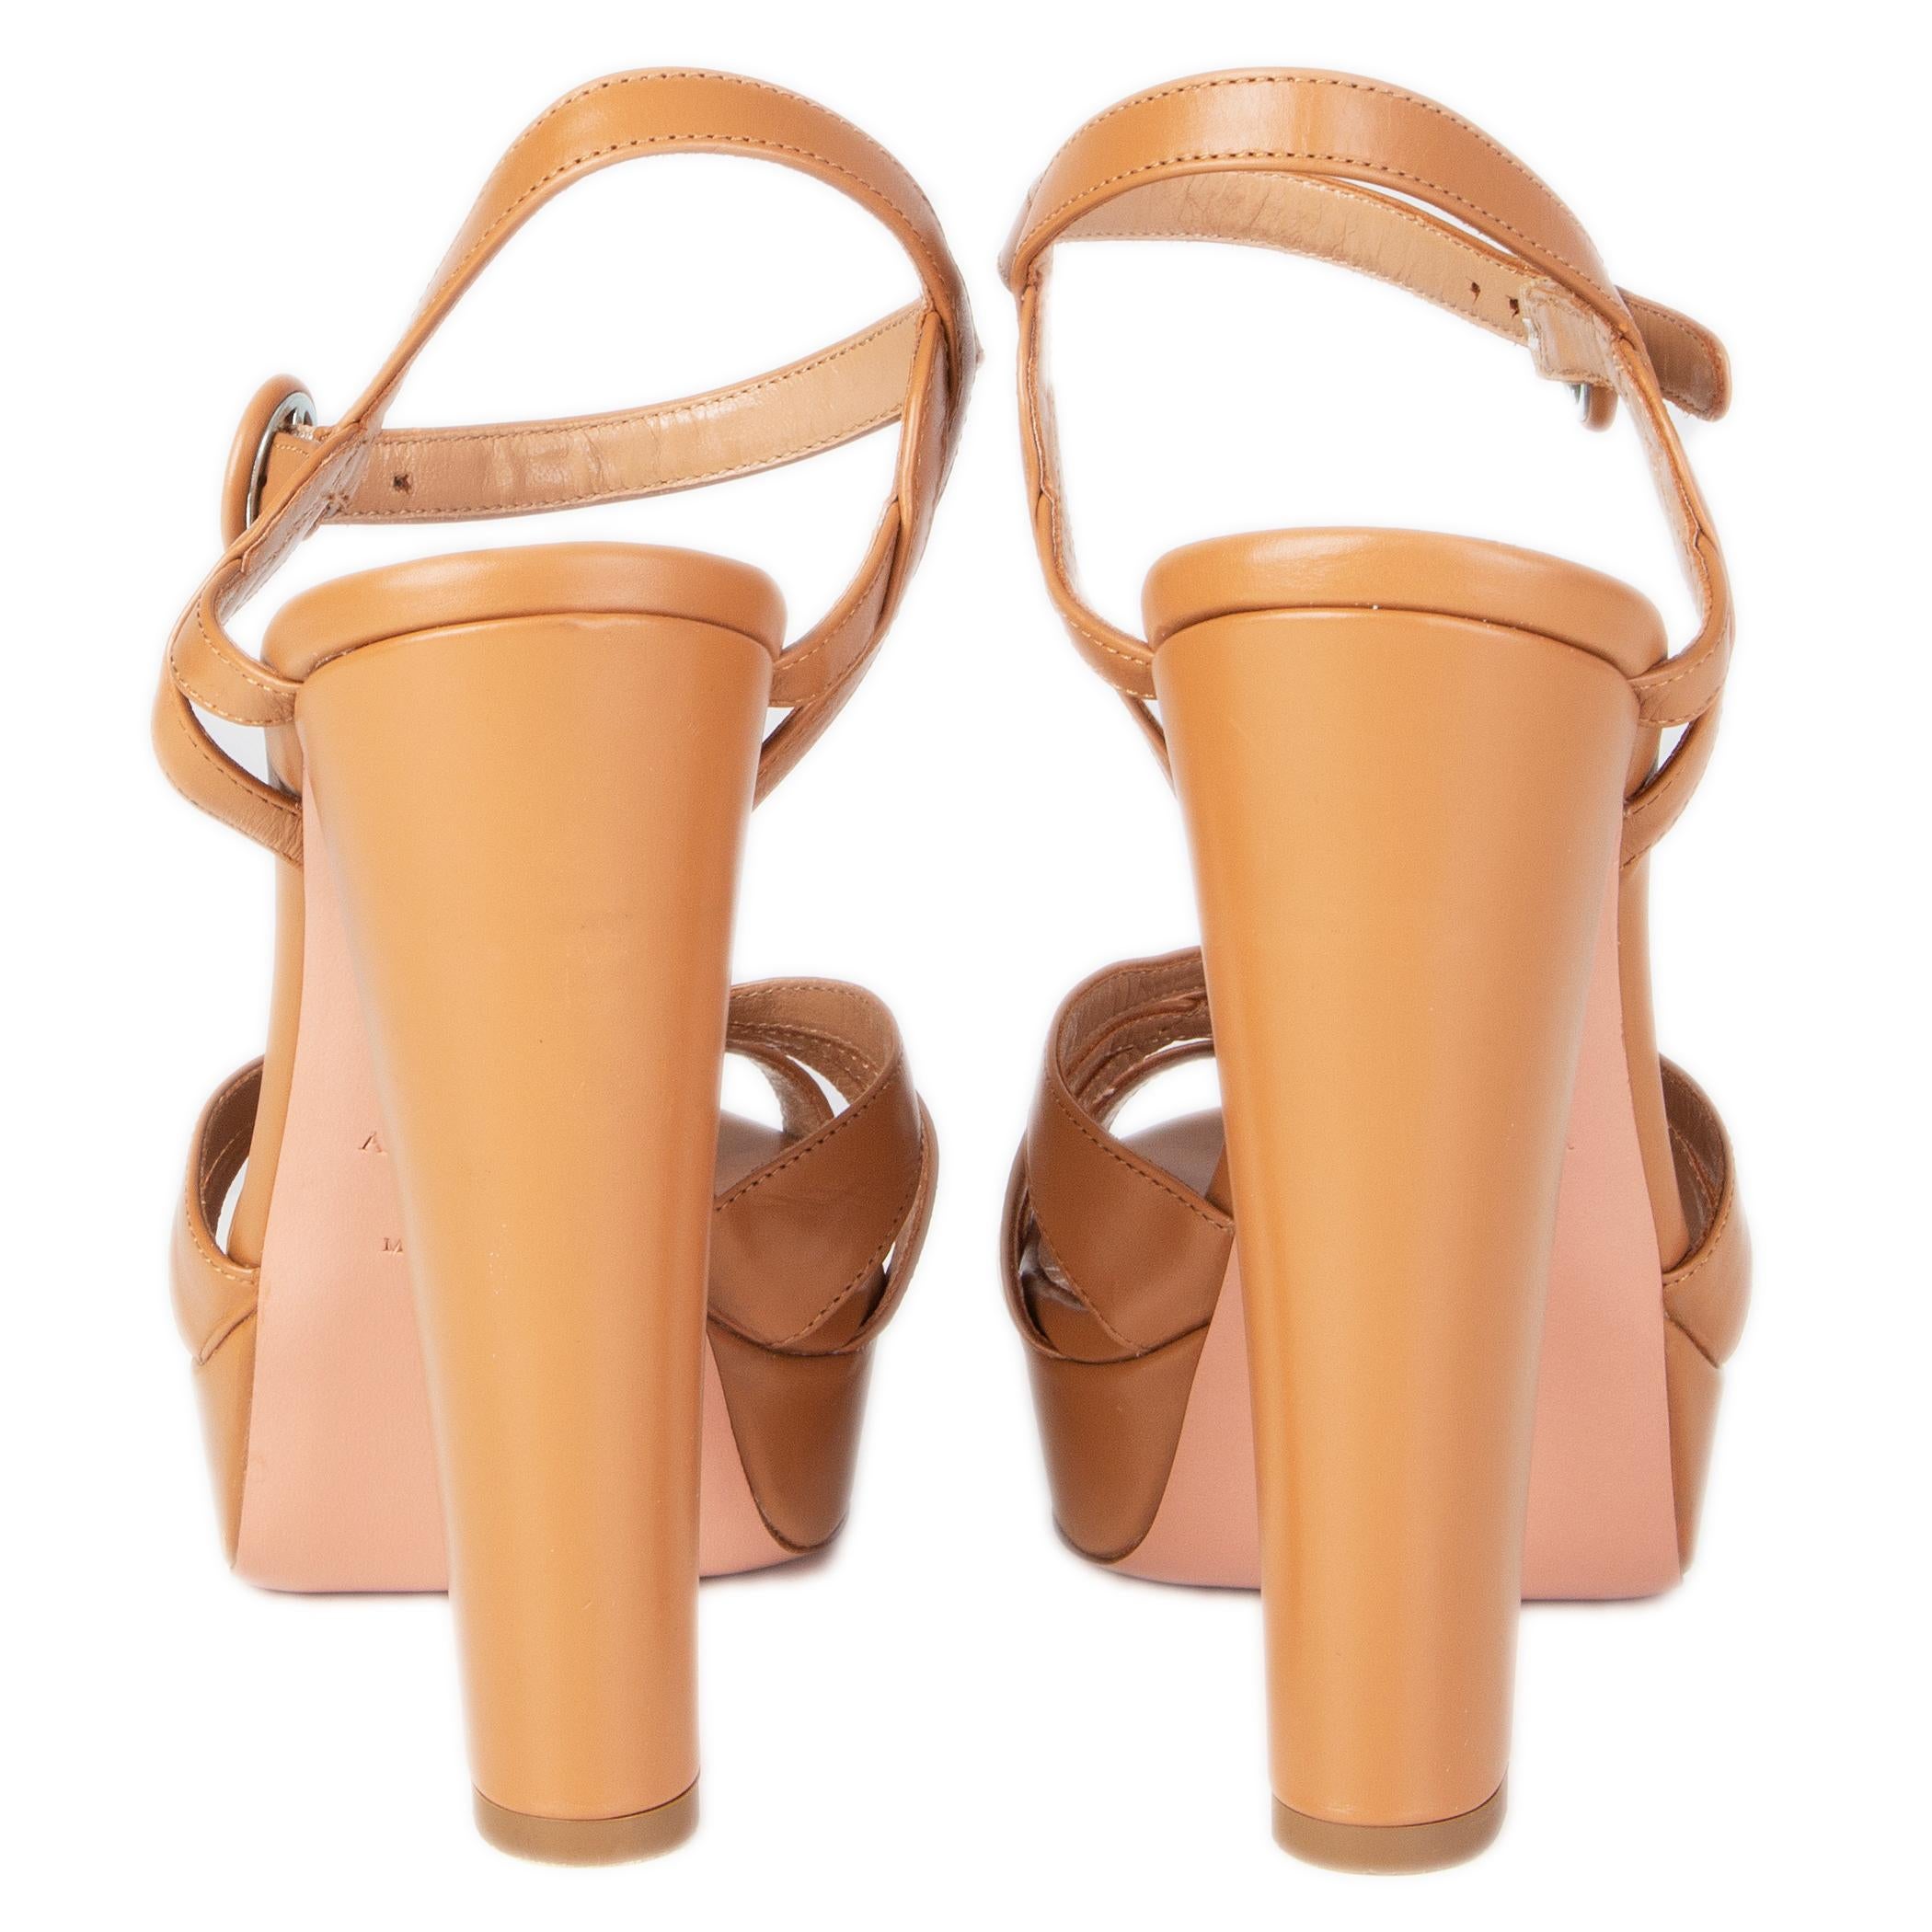 Orange AQUAZZURA tan leather BLOCK HEEL PLATFORM Sandals Shoes 37.5